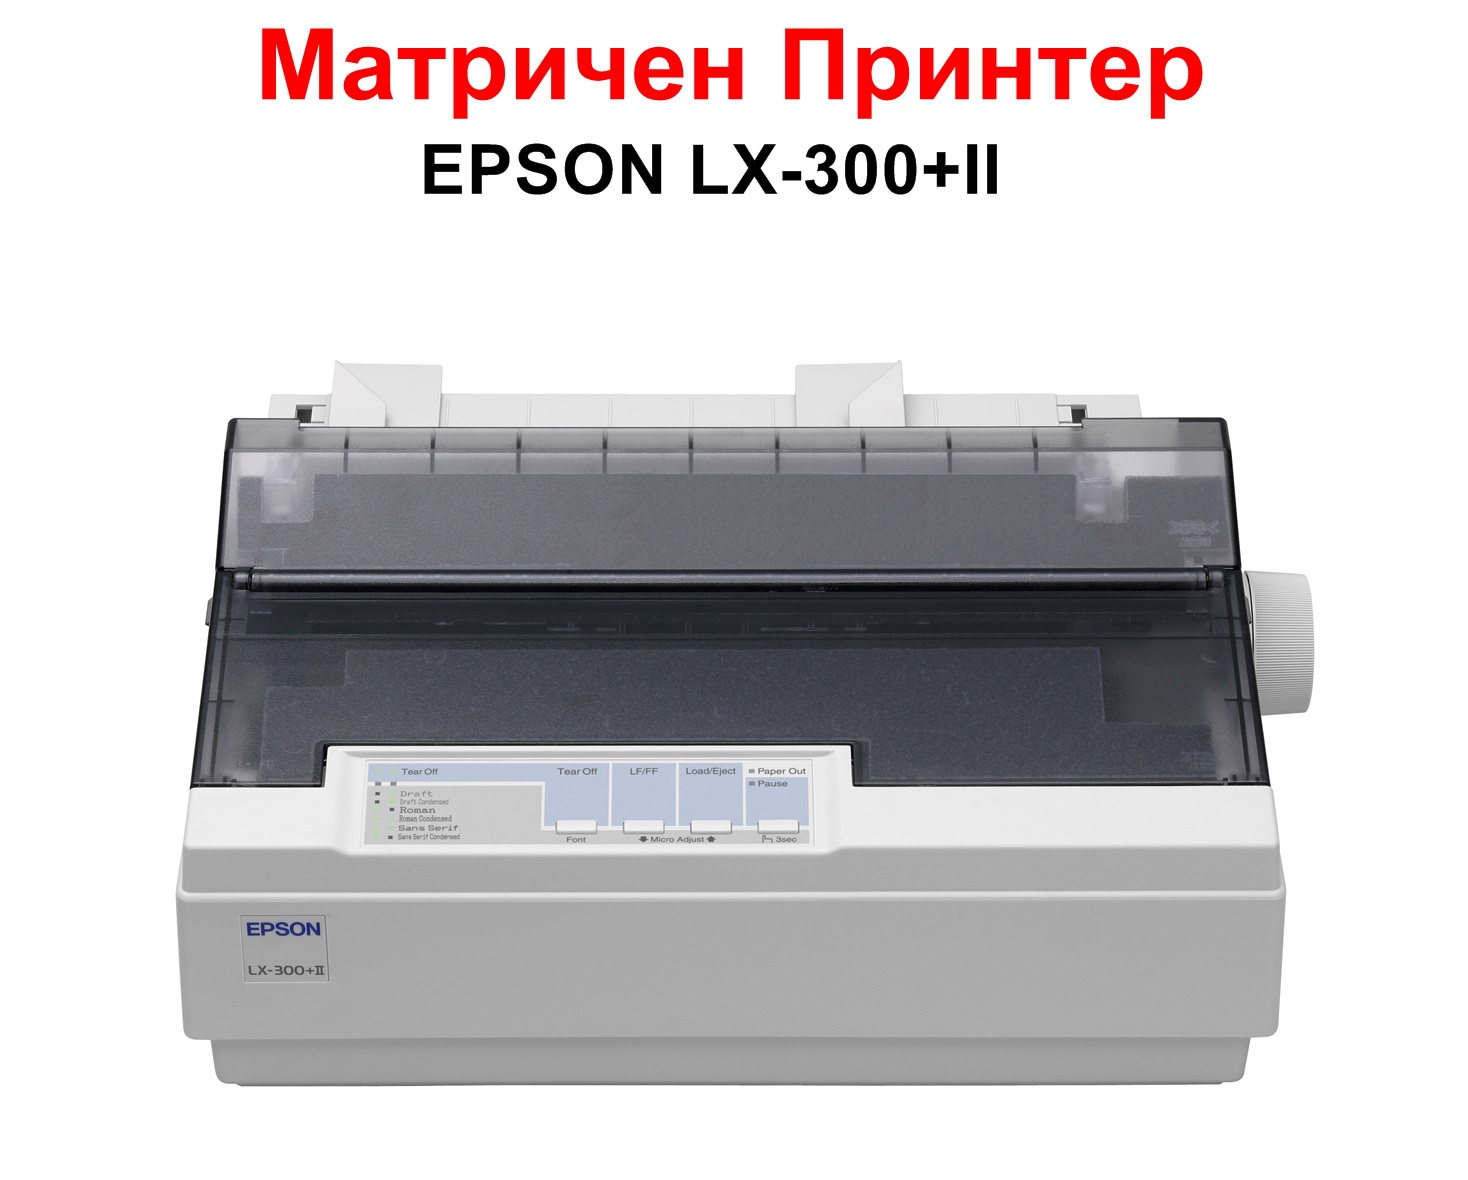 Матричен принтер EPSON LX-300+II